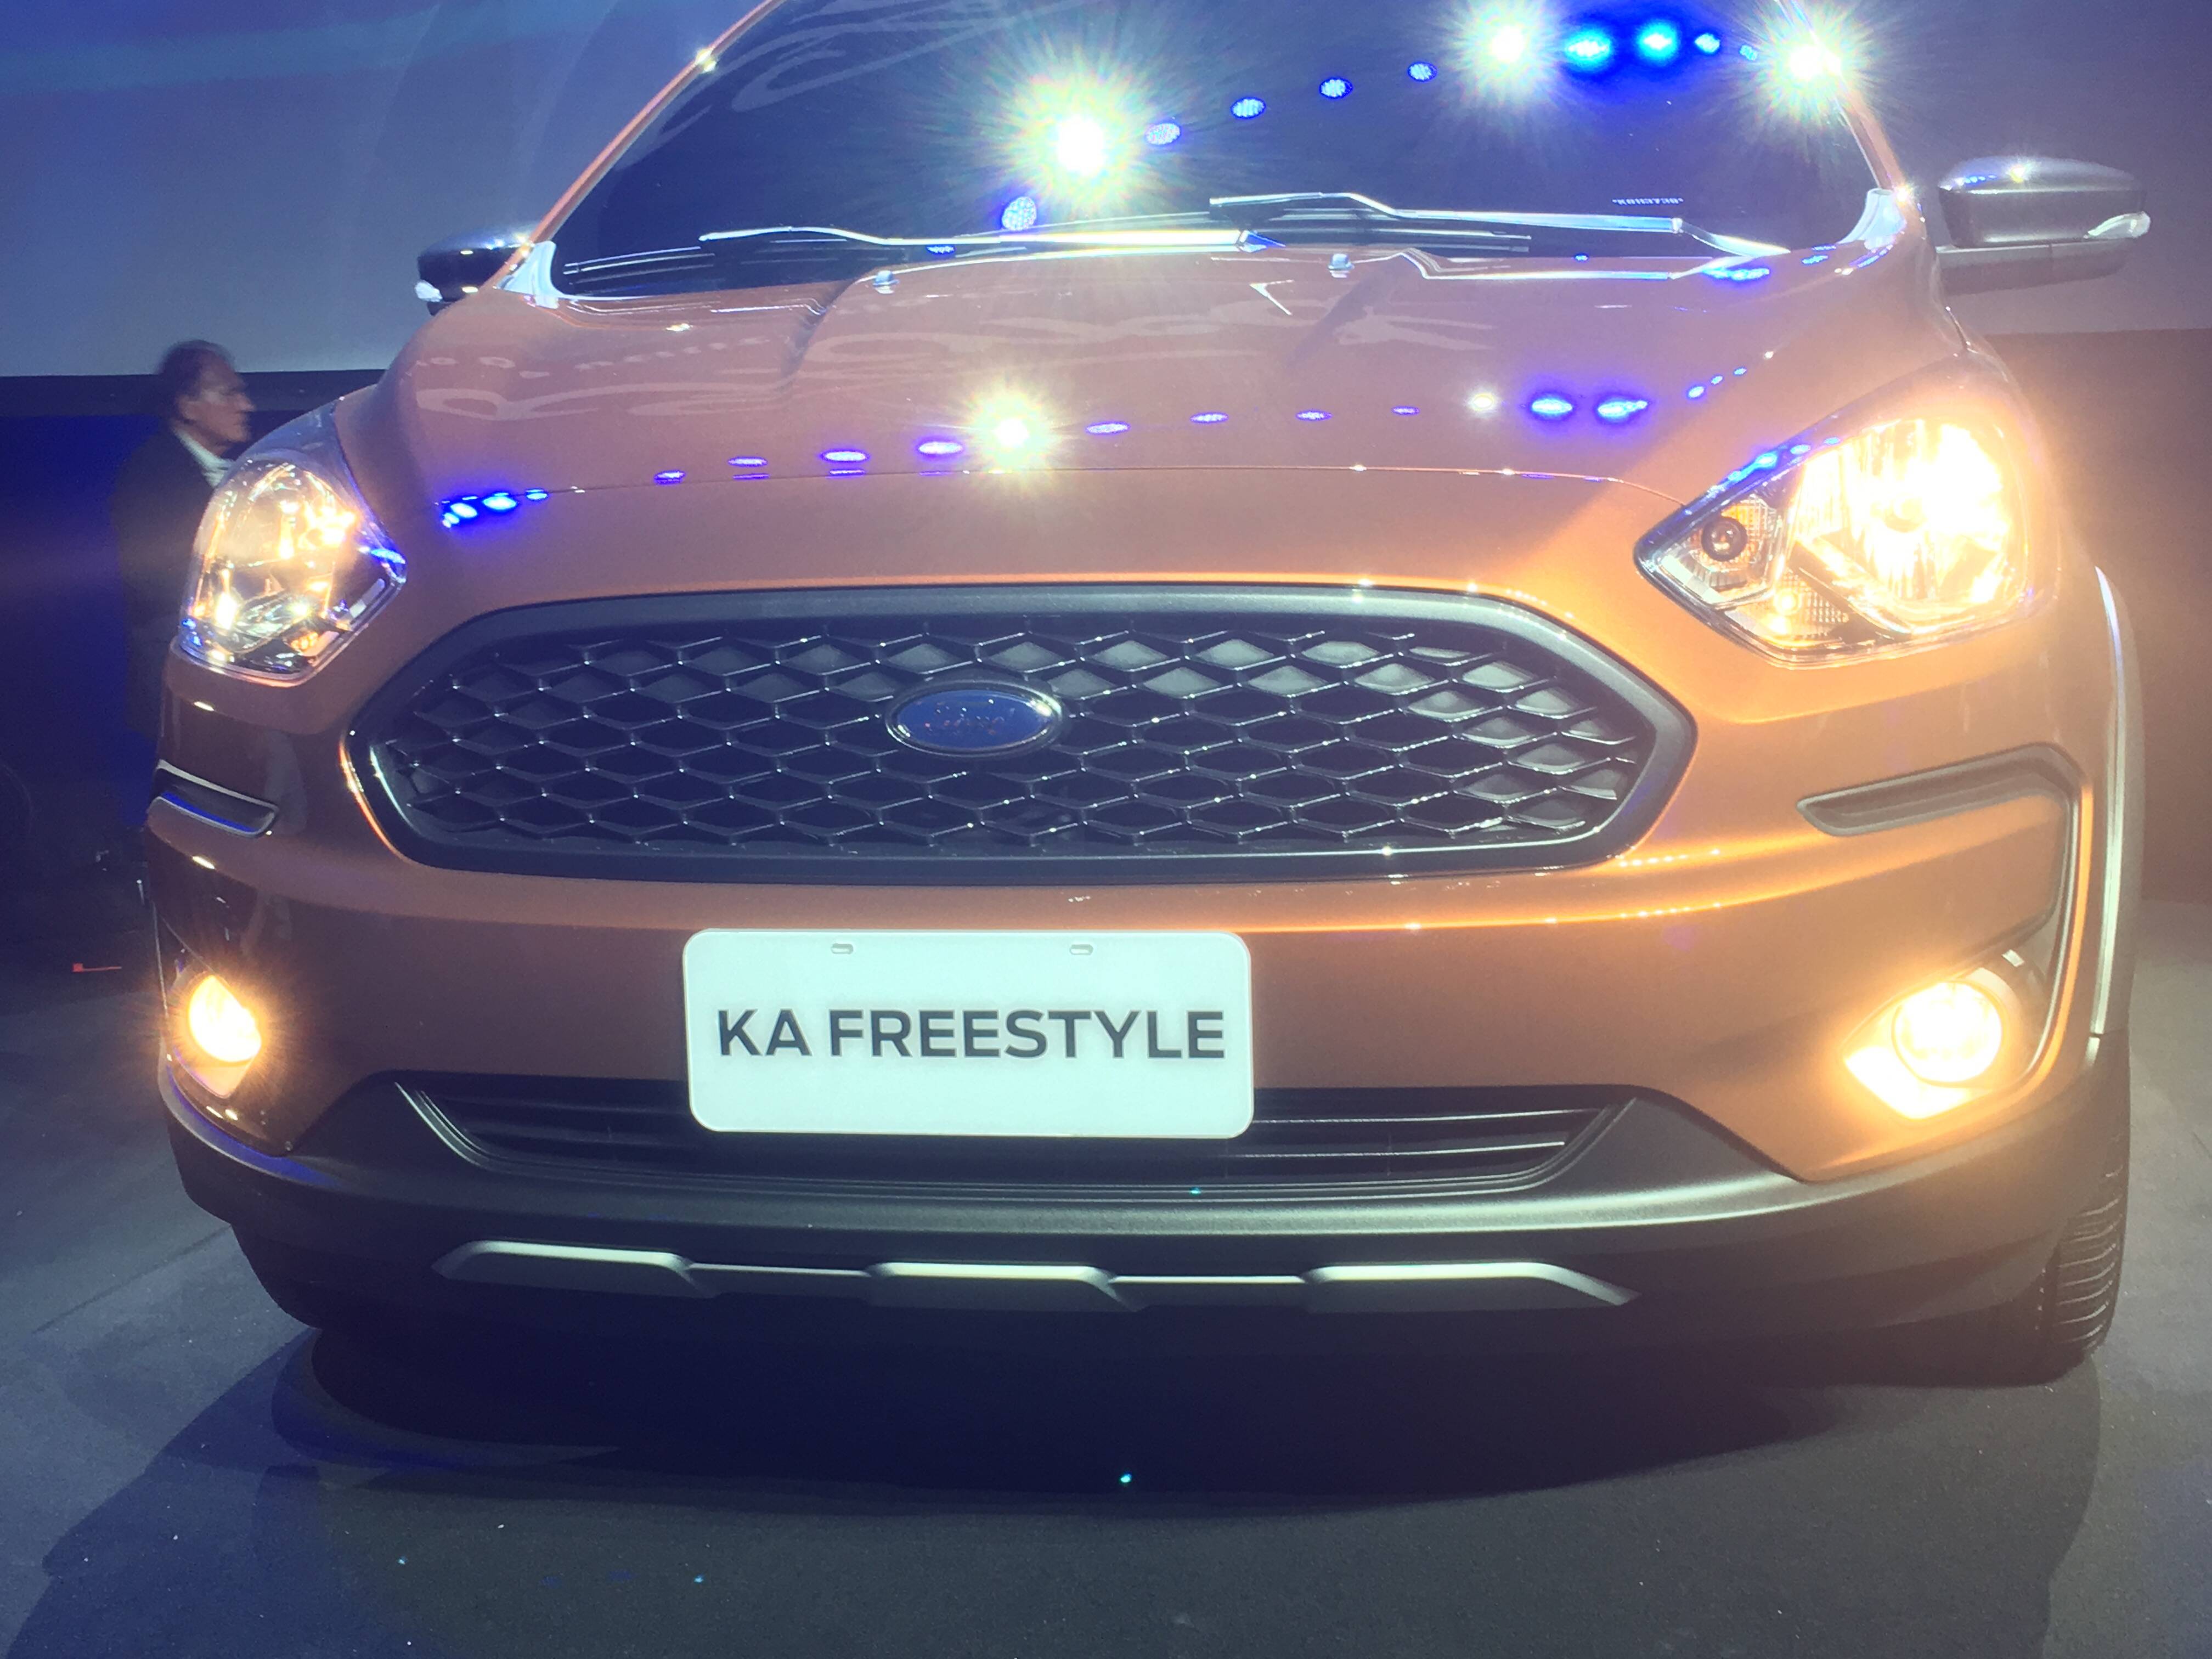 Ford Ka Freestyle. Foto: Guilherme Menezes